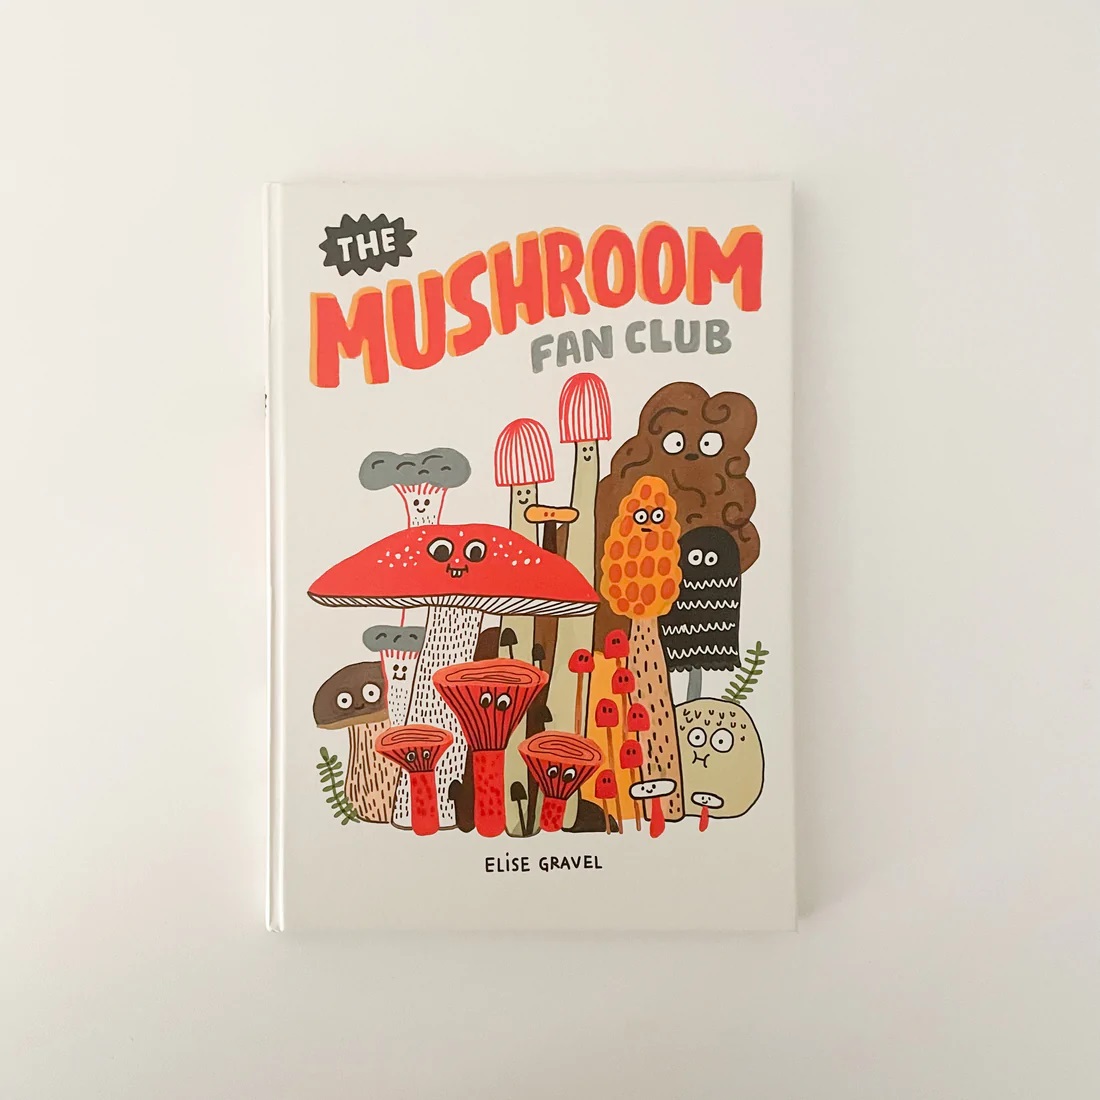 The Mushroom Fan Club: Gifts for Tweens - SavvyMom